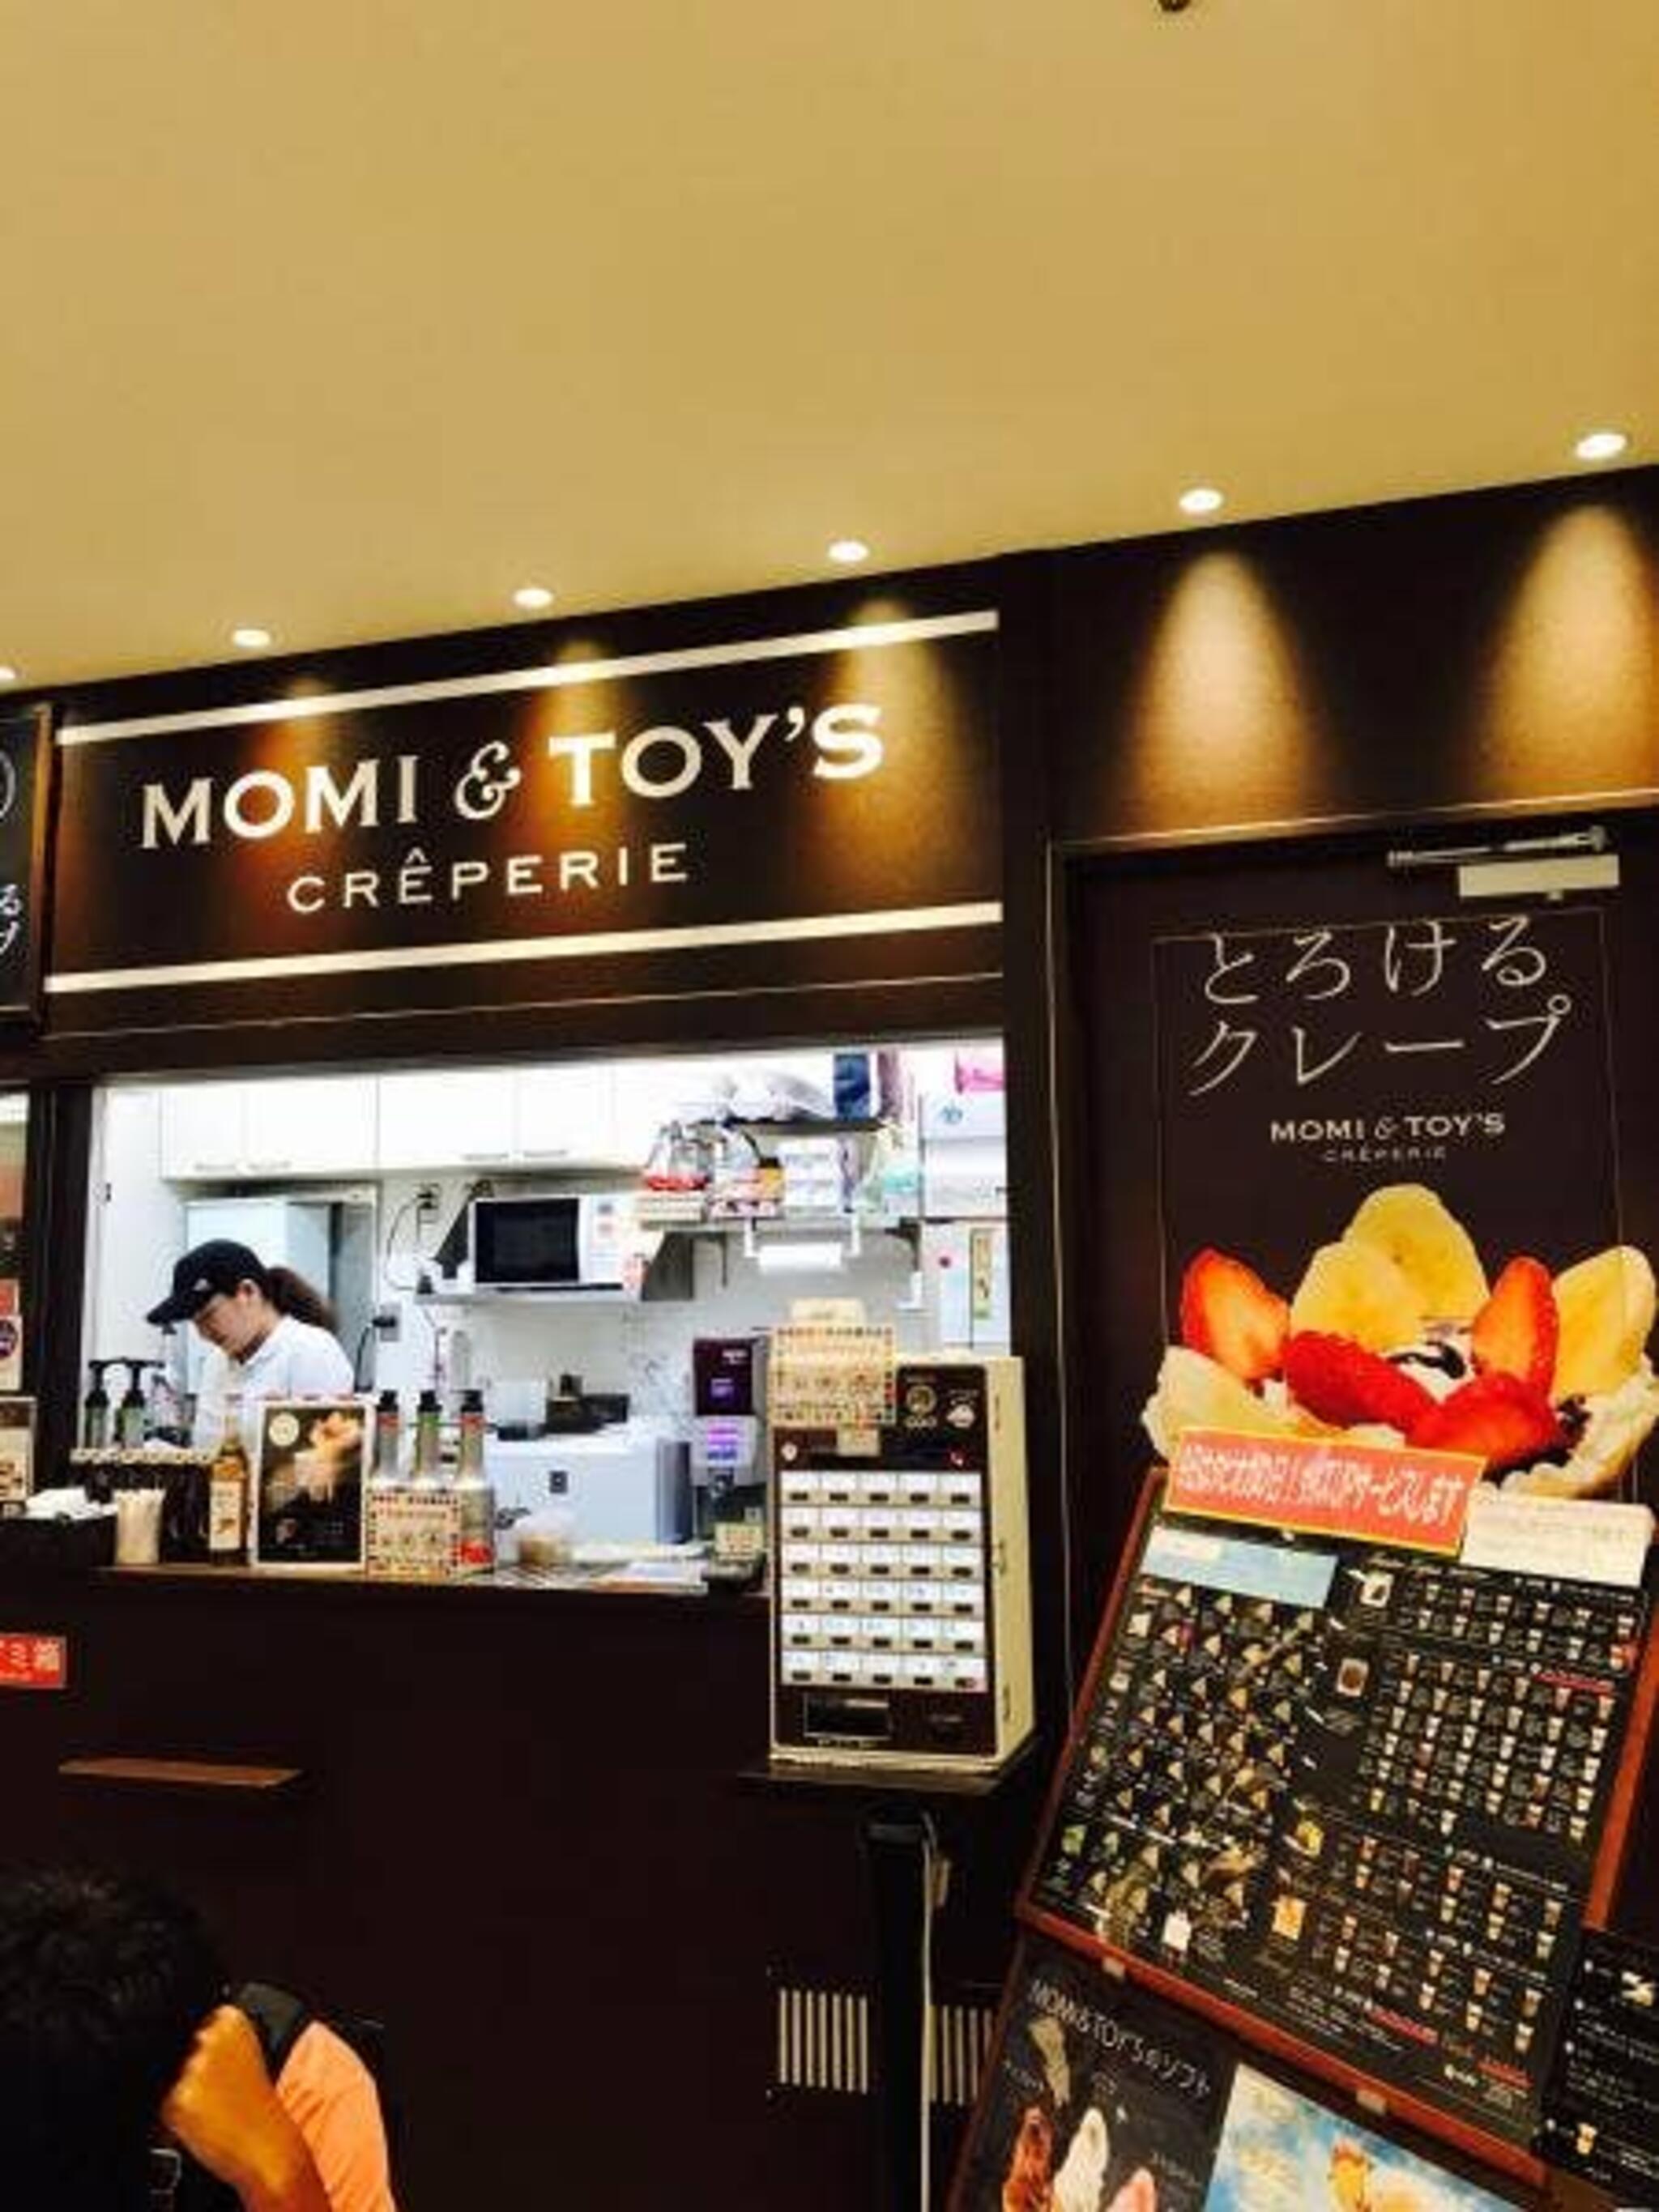 MOMI&TOY'S イーサイト高崎店の代表写真6